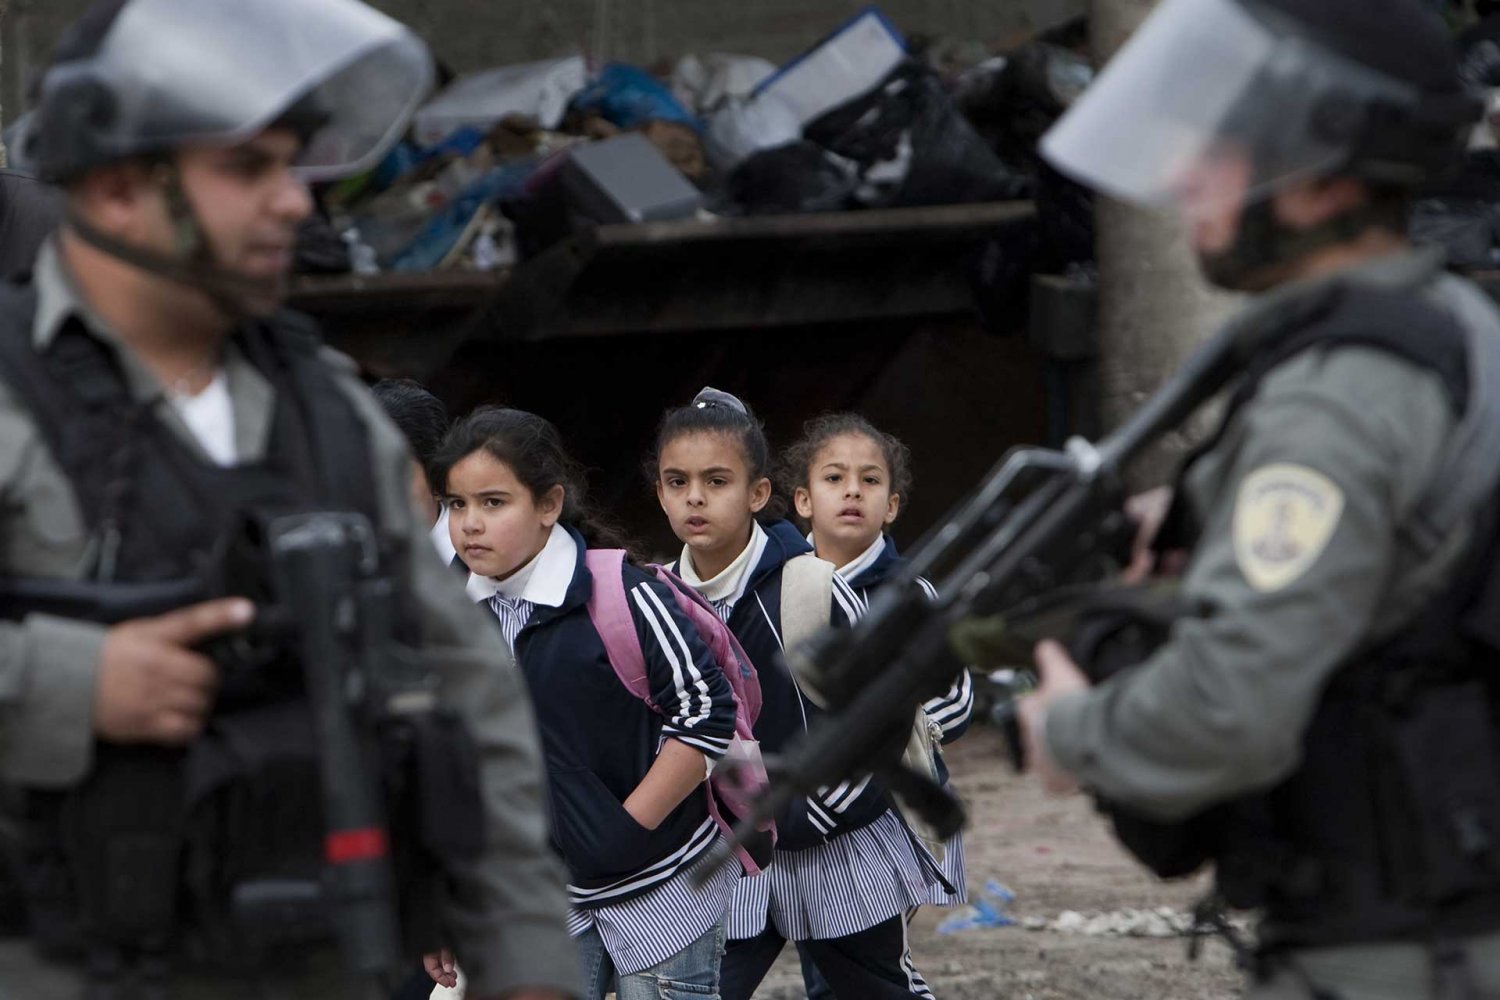 Palestinian schoolgirls walk past Israeli soldiers in Shufat refugee camp in Jerusalem, February 8, 2010.